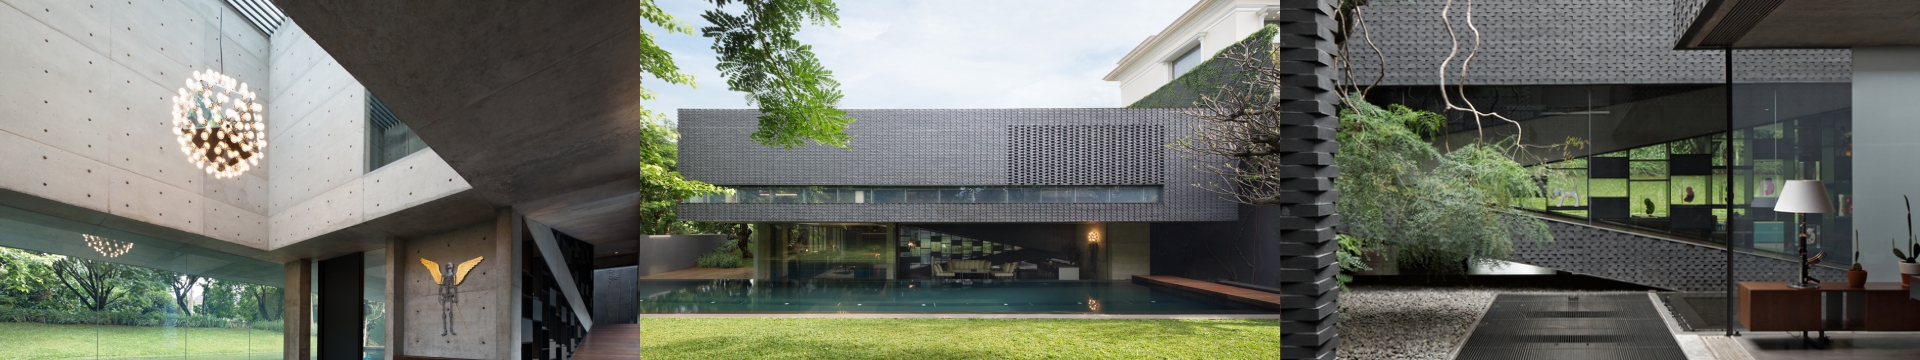 AW Residence dengan Fasad Batu Bata Karya Arsitek Andra Matin